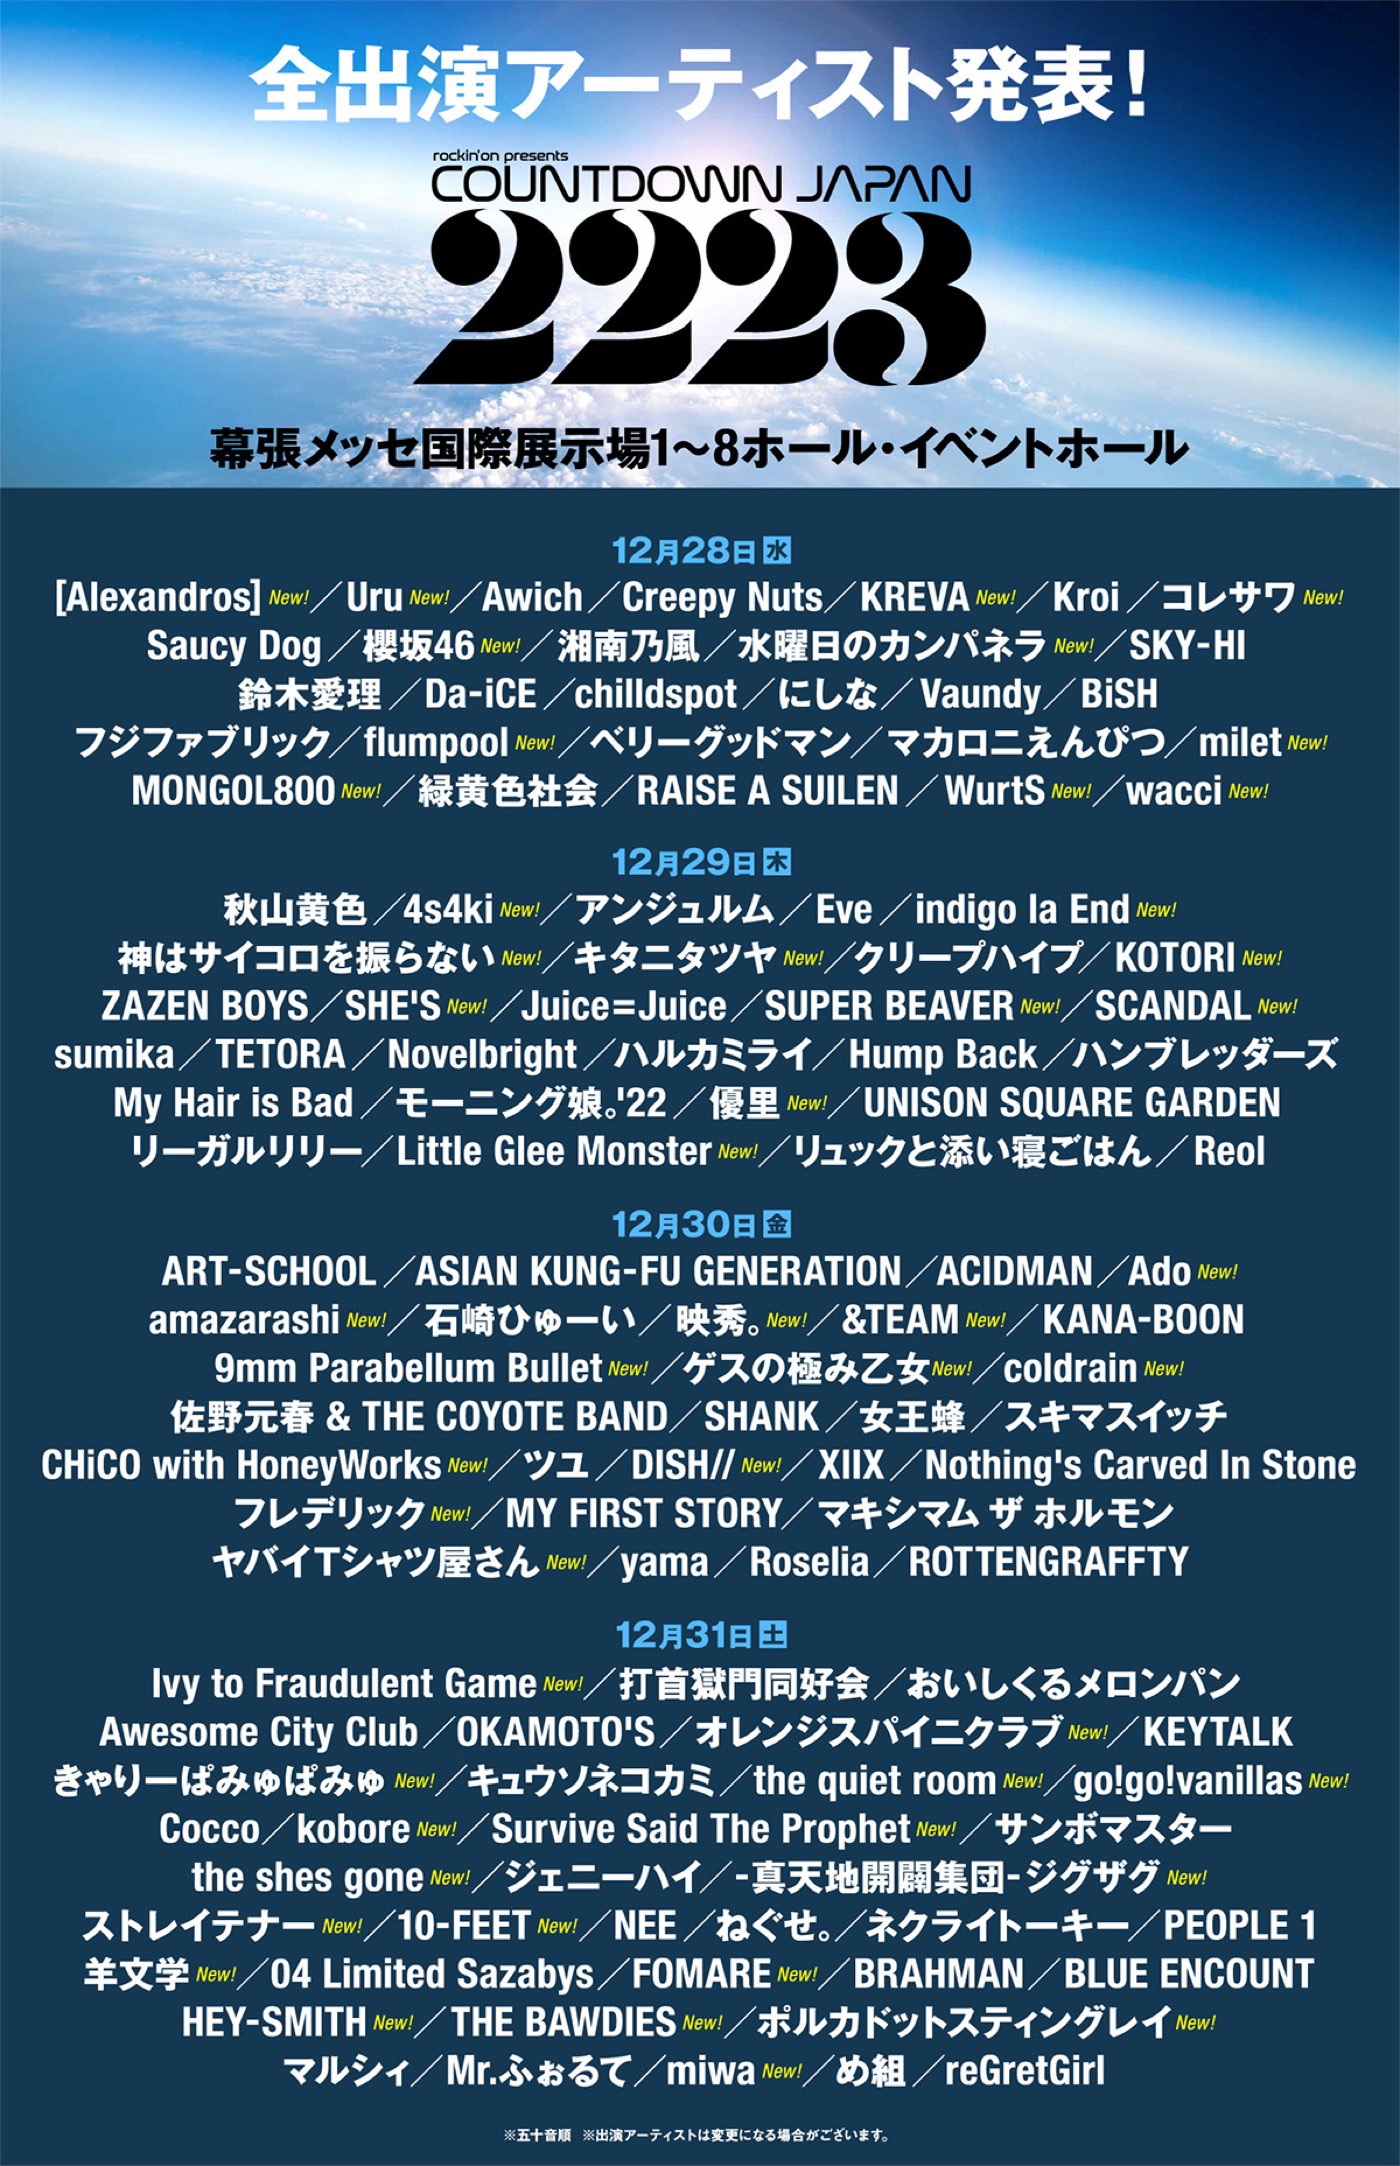 COUNTDOWN JAPAN 22/23』総勢121組の出演アーティストが決定。チケット ...